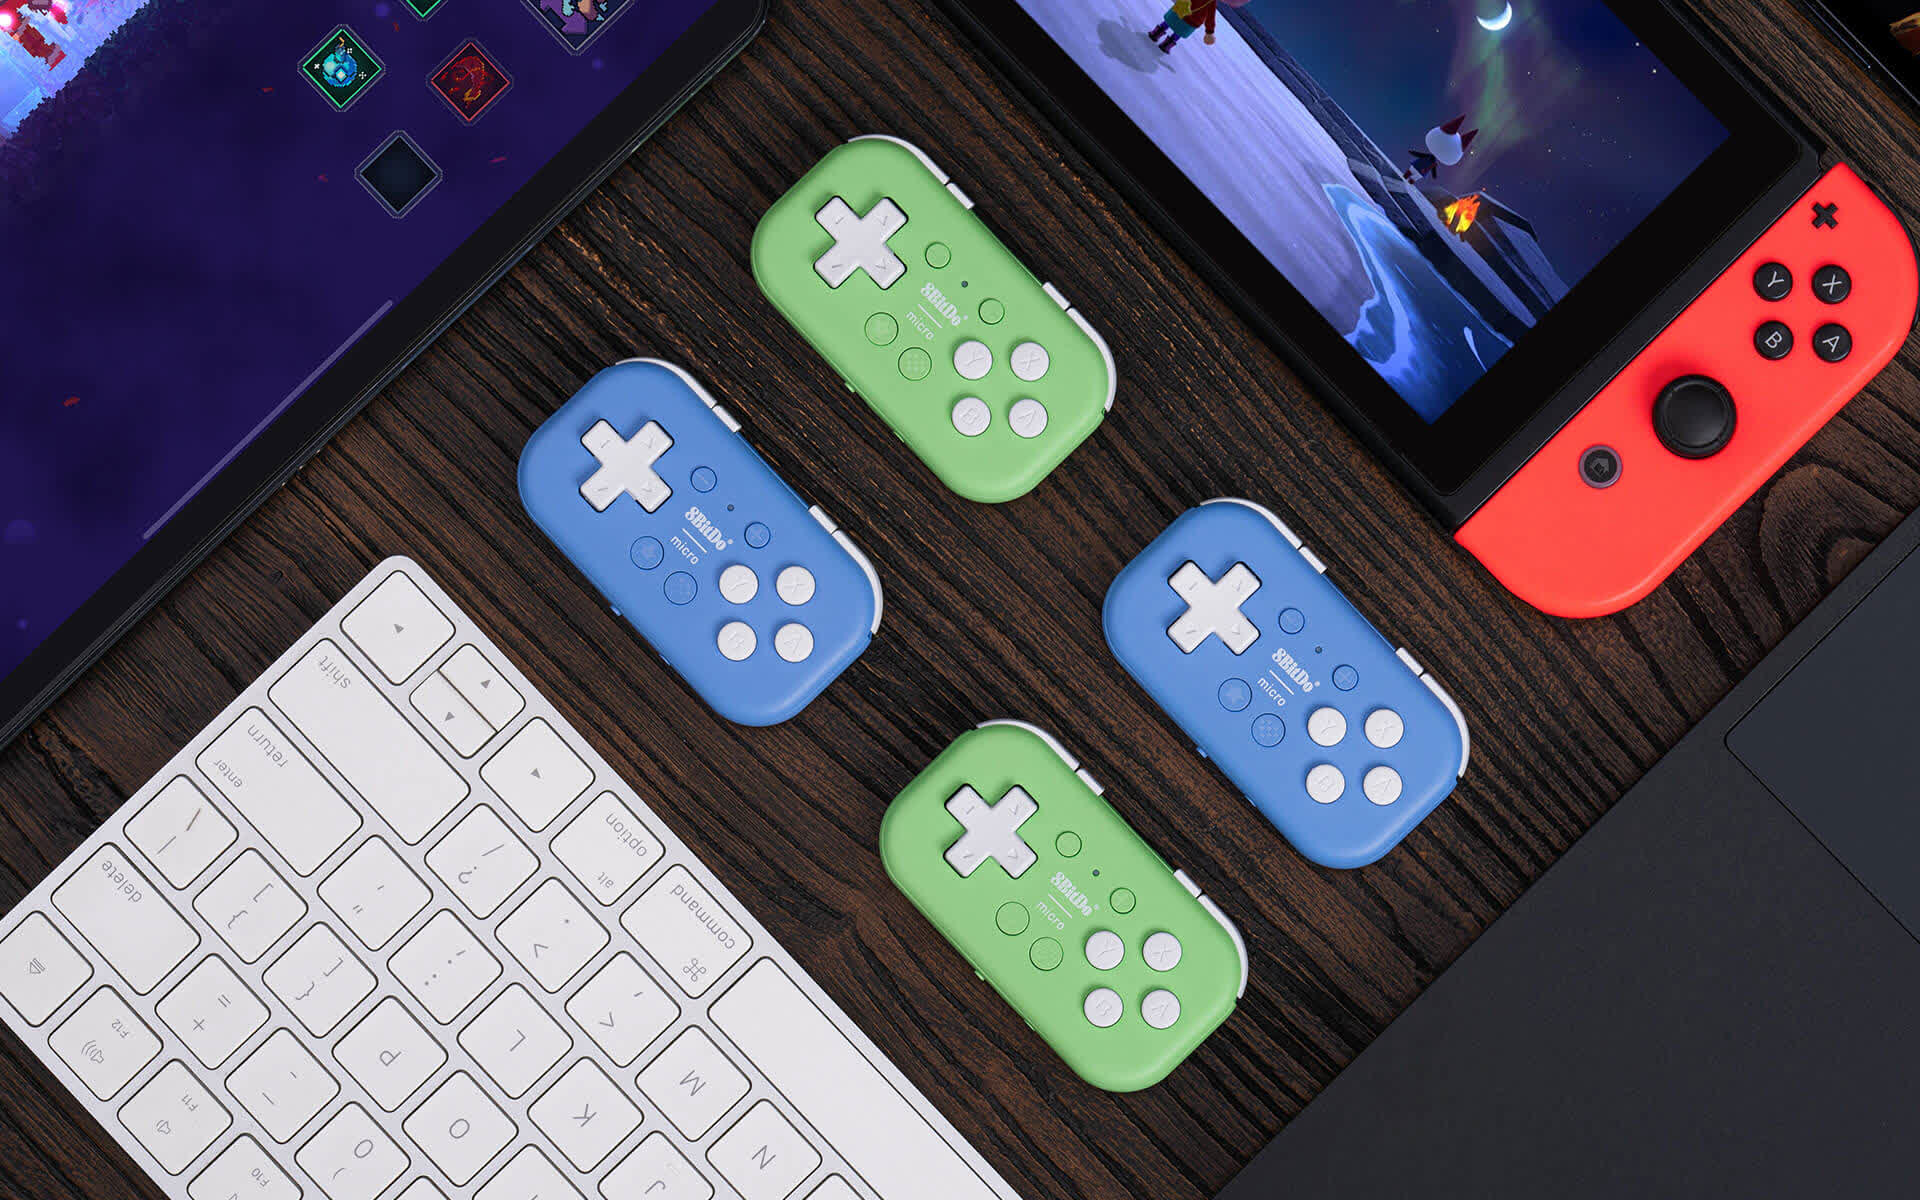 8BitDo Micro stuffs 16 buttons onto a tiny Bluetooth gamepad